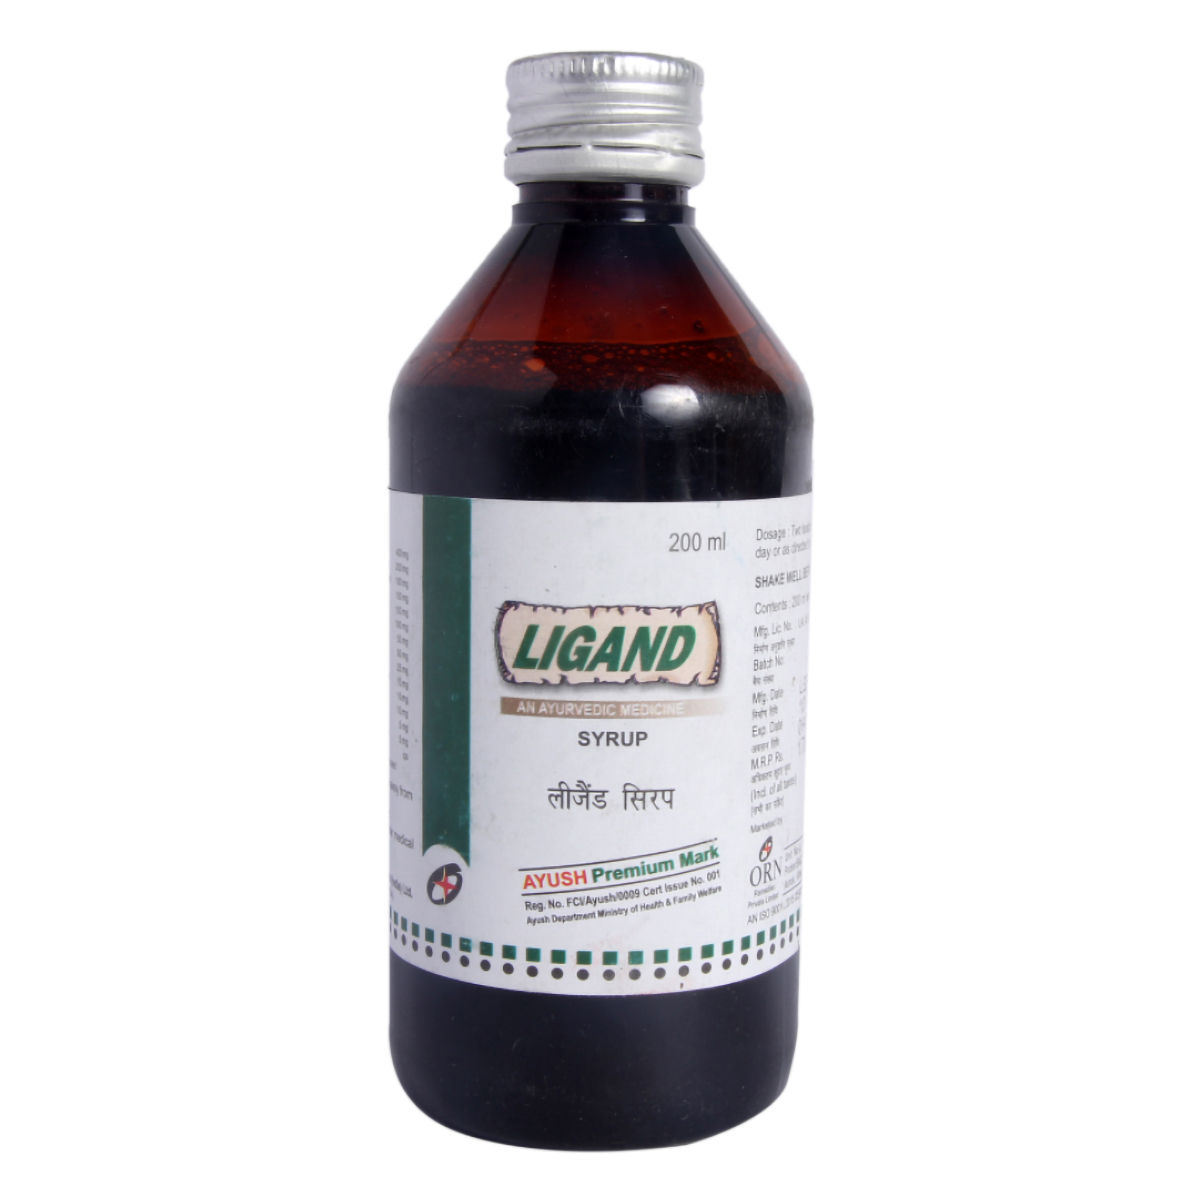 Buy Ligand Syrup, 200 ml Online